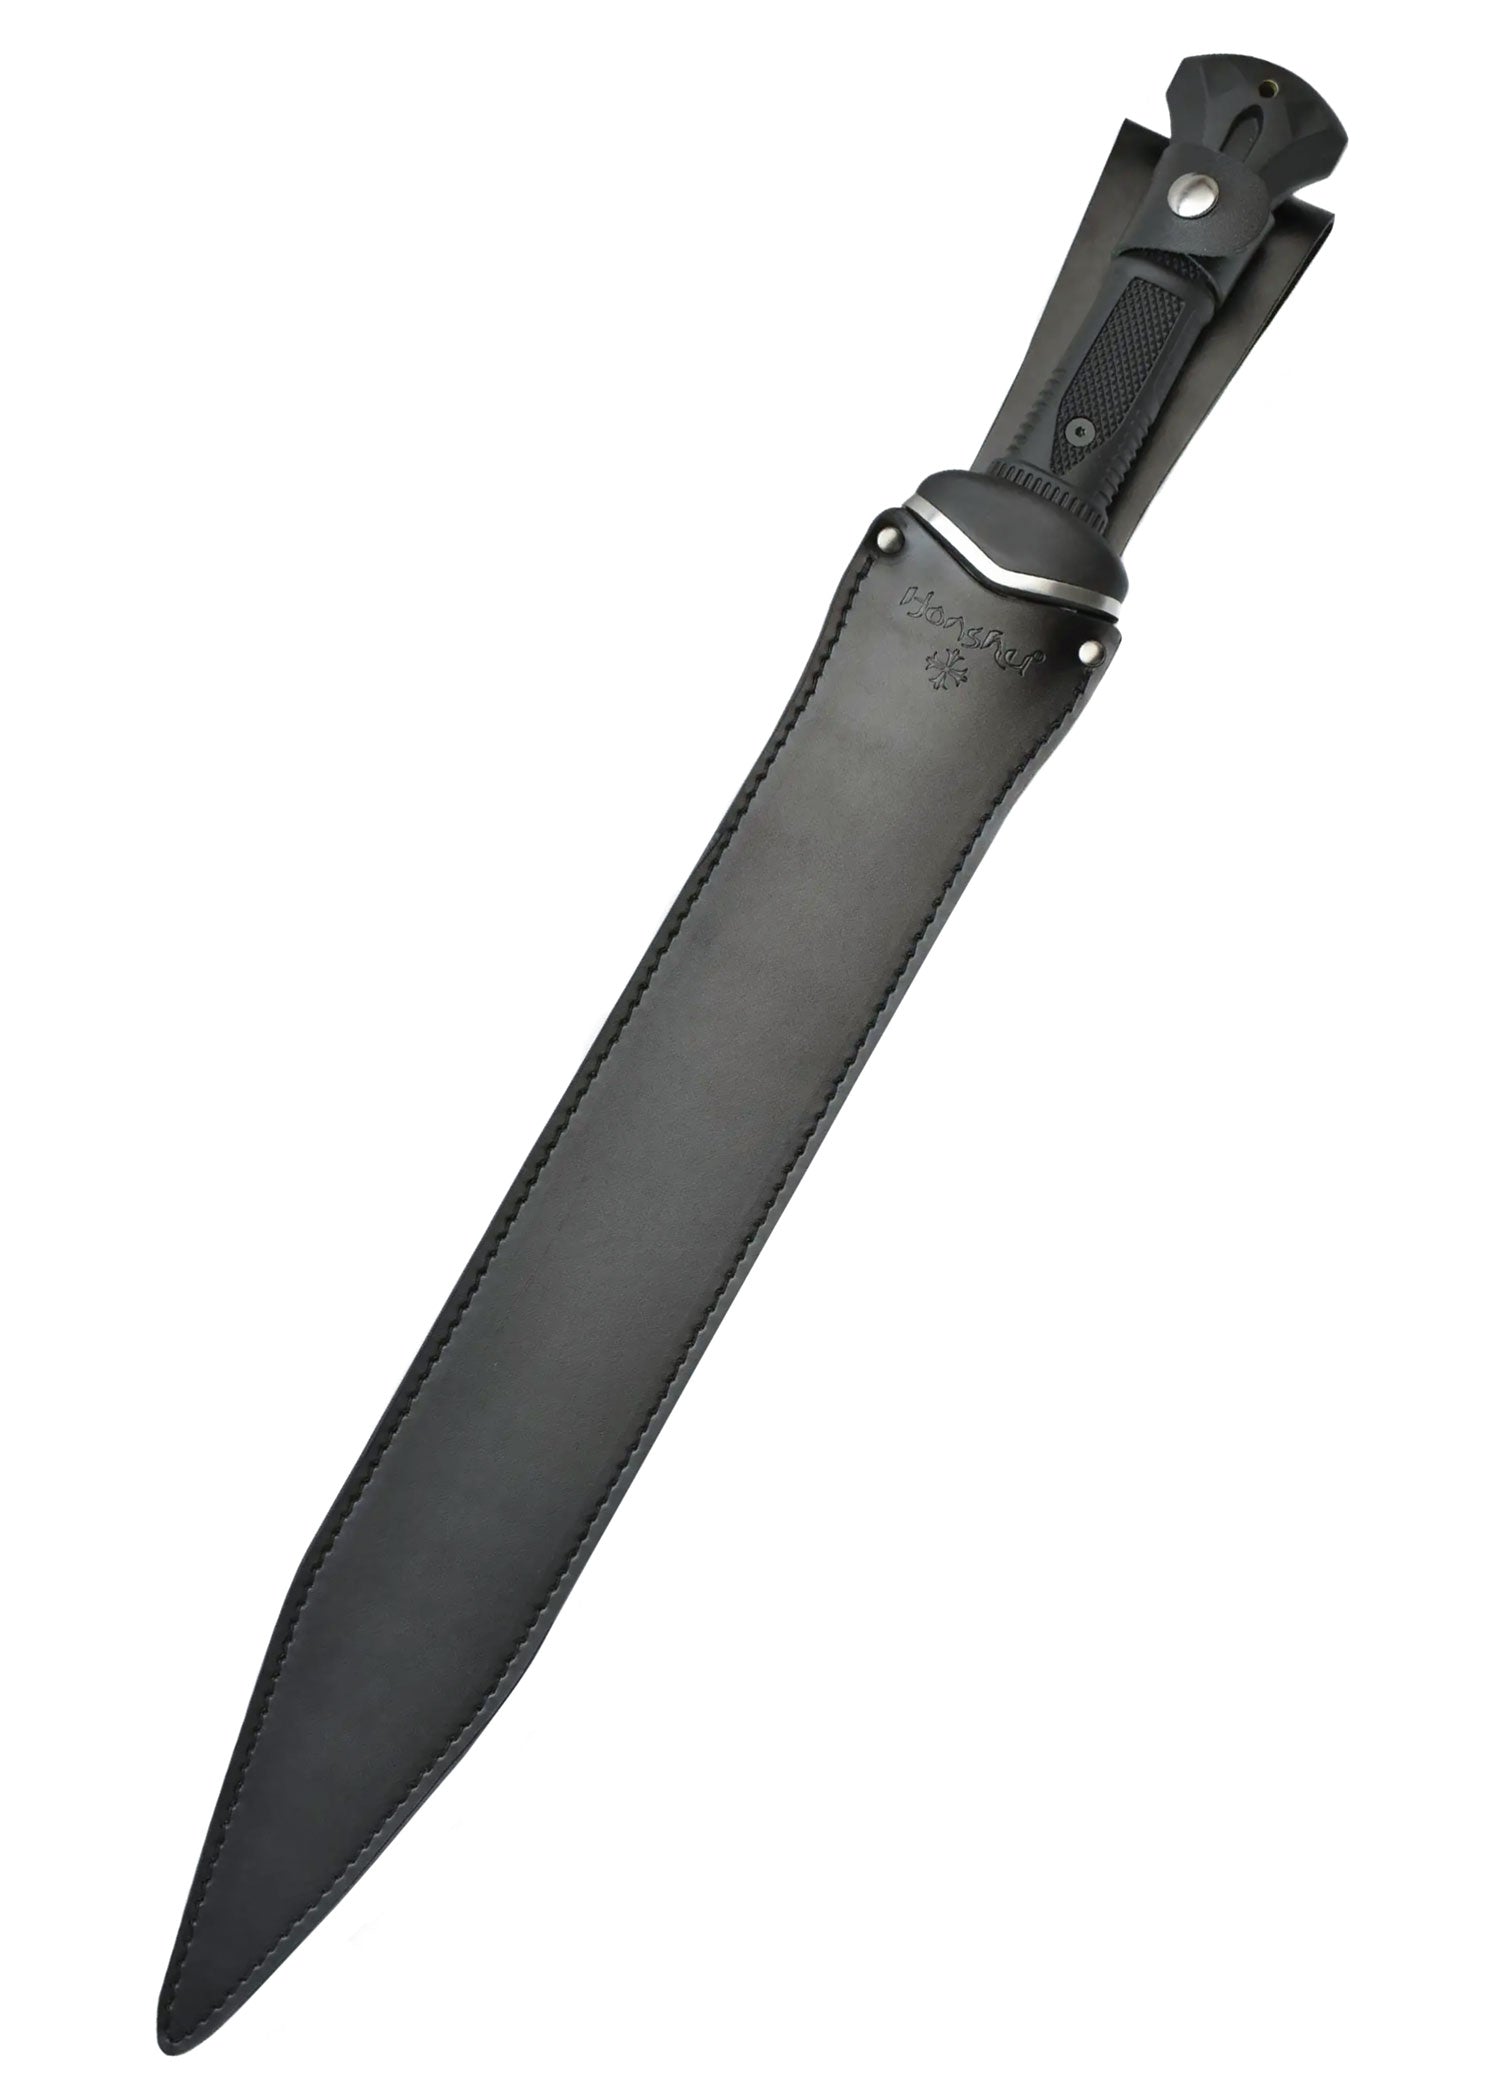 Épée Honshu Gladiator - United Cutlery-T.A DEFENSE